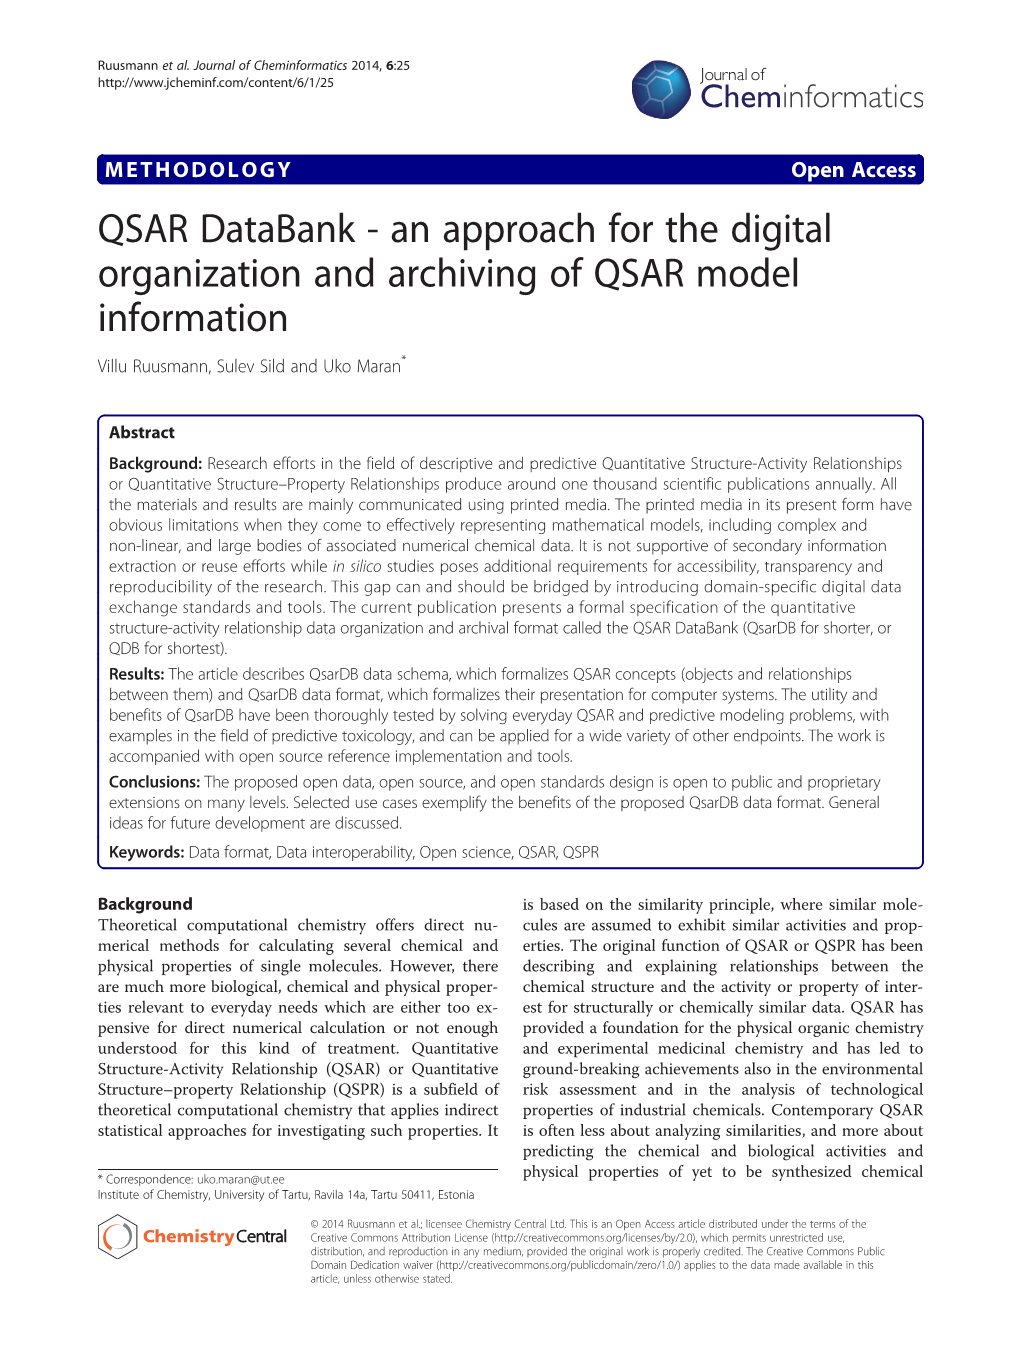 QSAR Databank - an Approach for the Digital Organization and Archiving of QSAR Model Information Villu Ruusmann, Sulev Sild and Uko Maran*